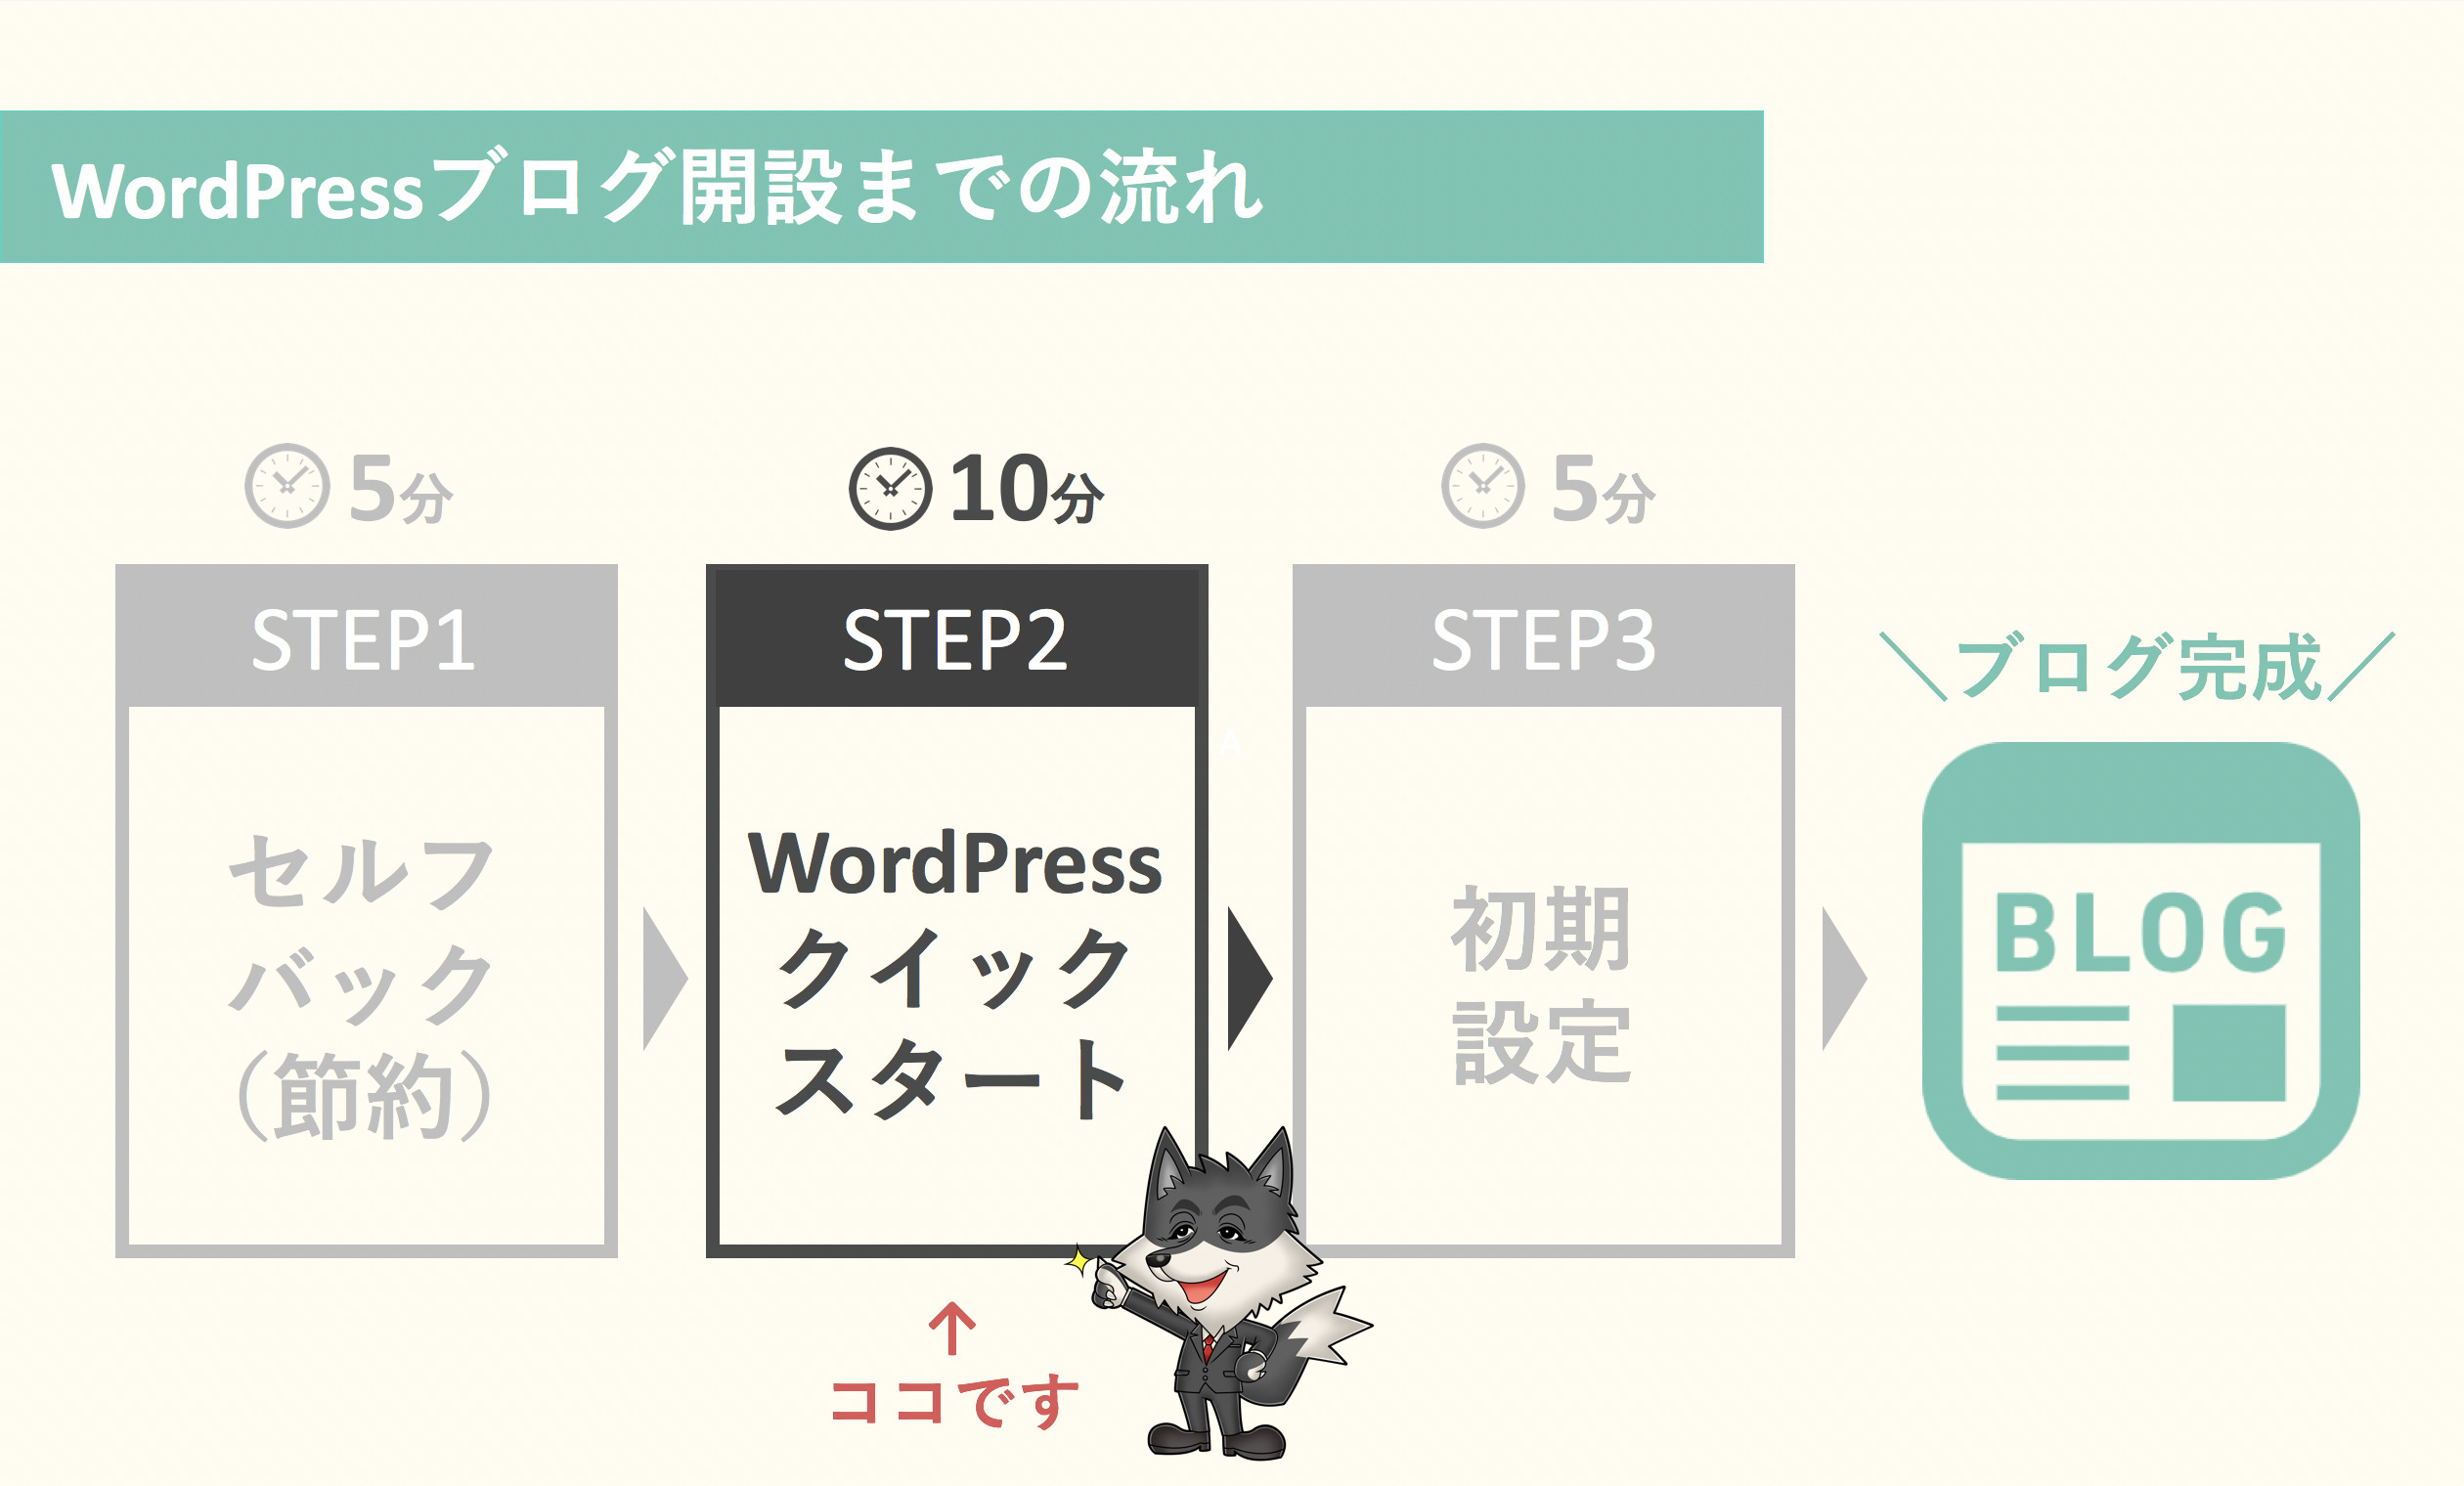 STEP2：WordPressクイックスタート【ドメインとサーバーとワードプレスを一気に申し込み】